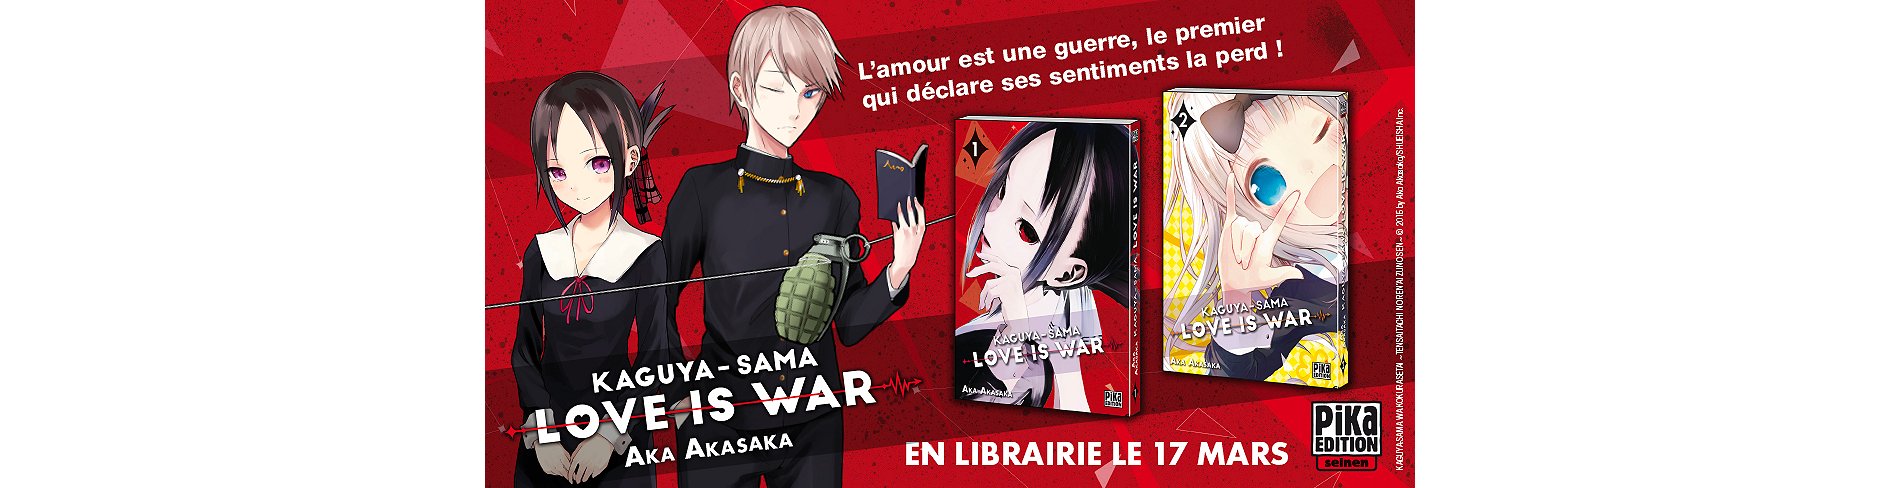 Kaguya-sama: Love is War Tome 1 (Manga) au meilleur prix